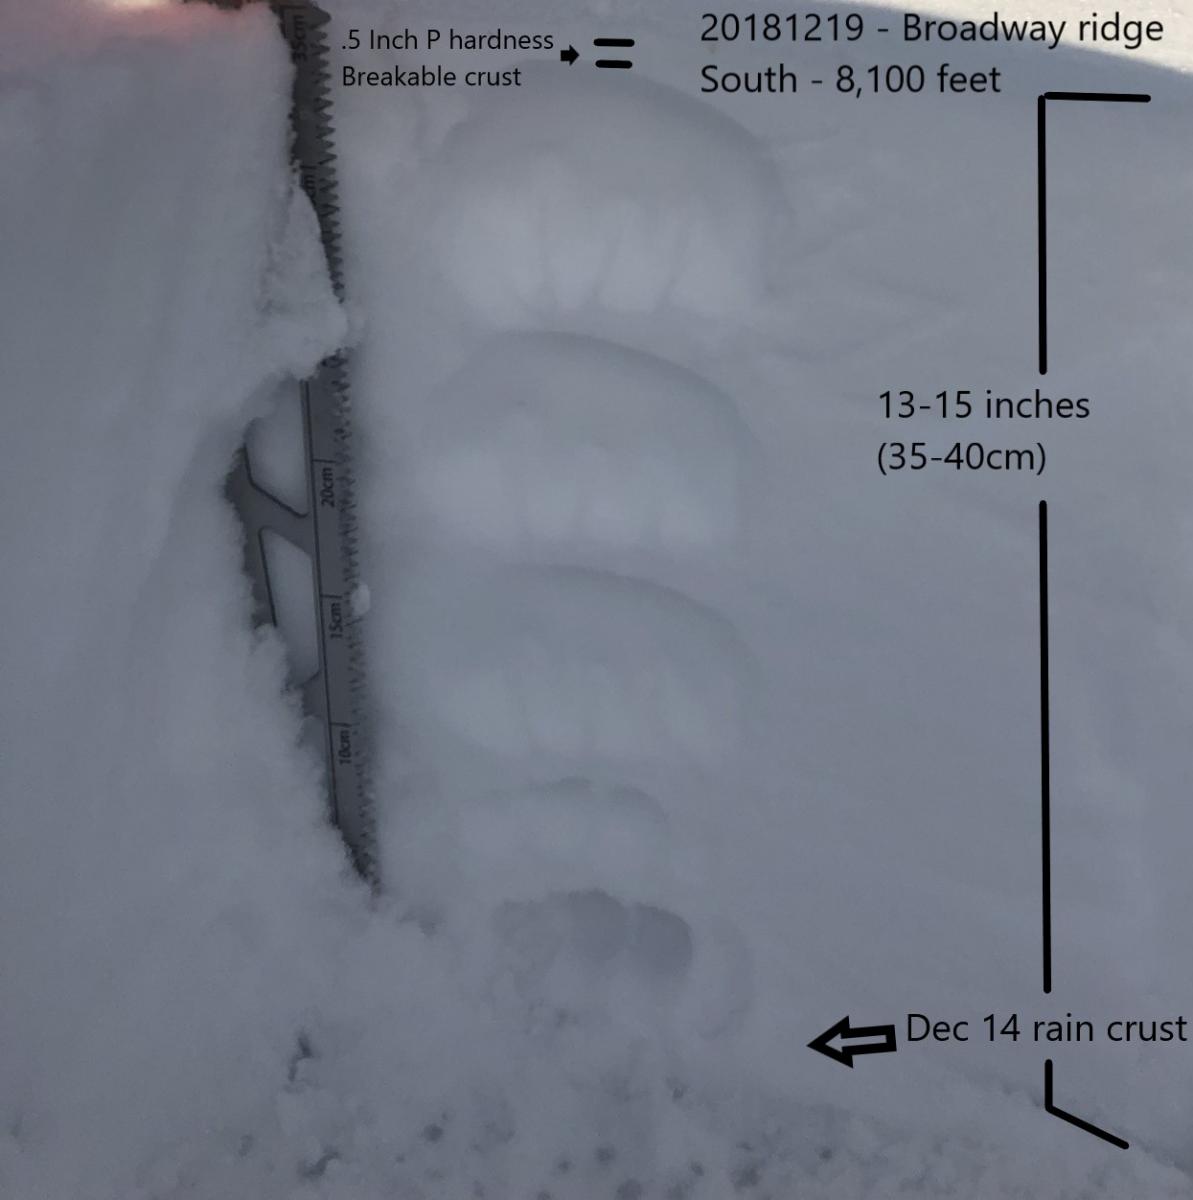 Broadway ridge south aspect 8100'. P hardness crust over F harness snow